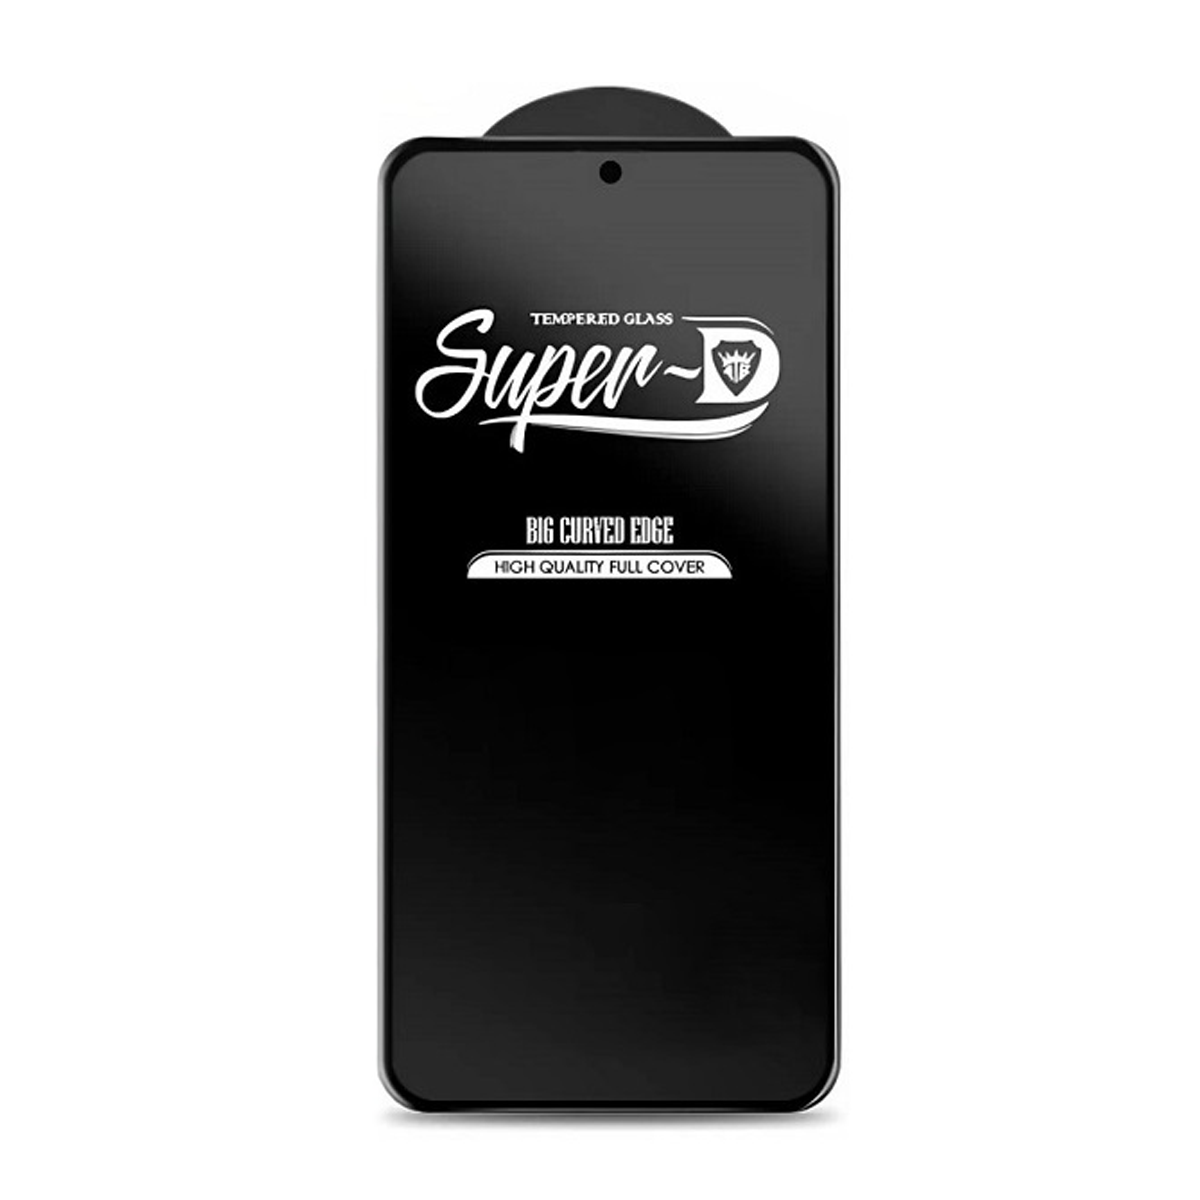 گلس گوشی پوکو C40 میتوبل مدل Super D copy-small-image.png